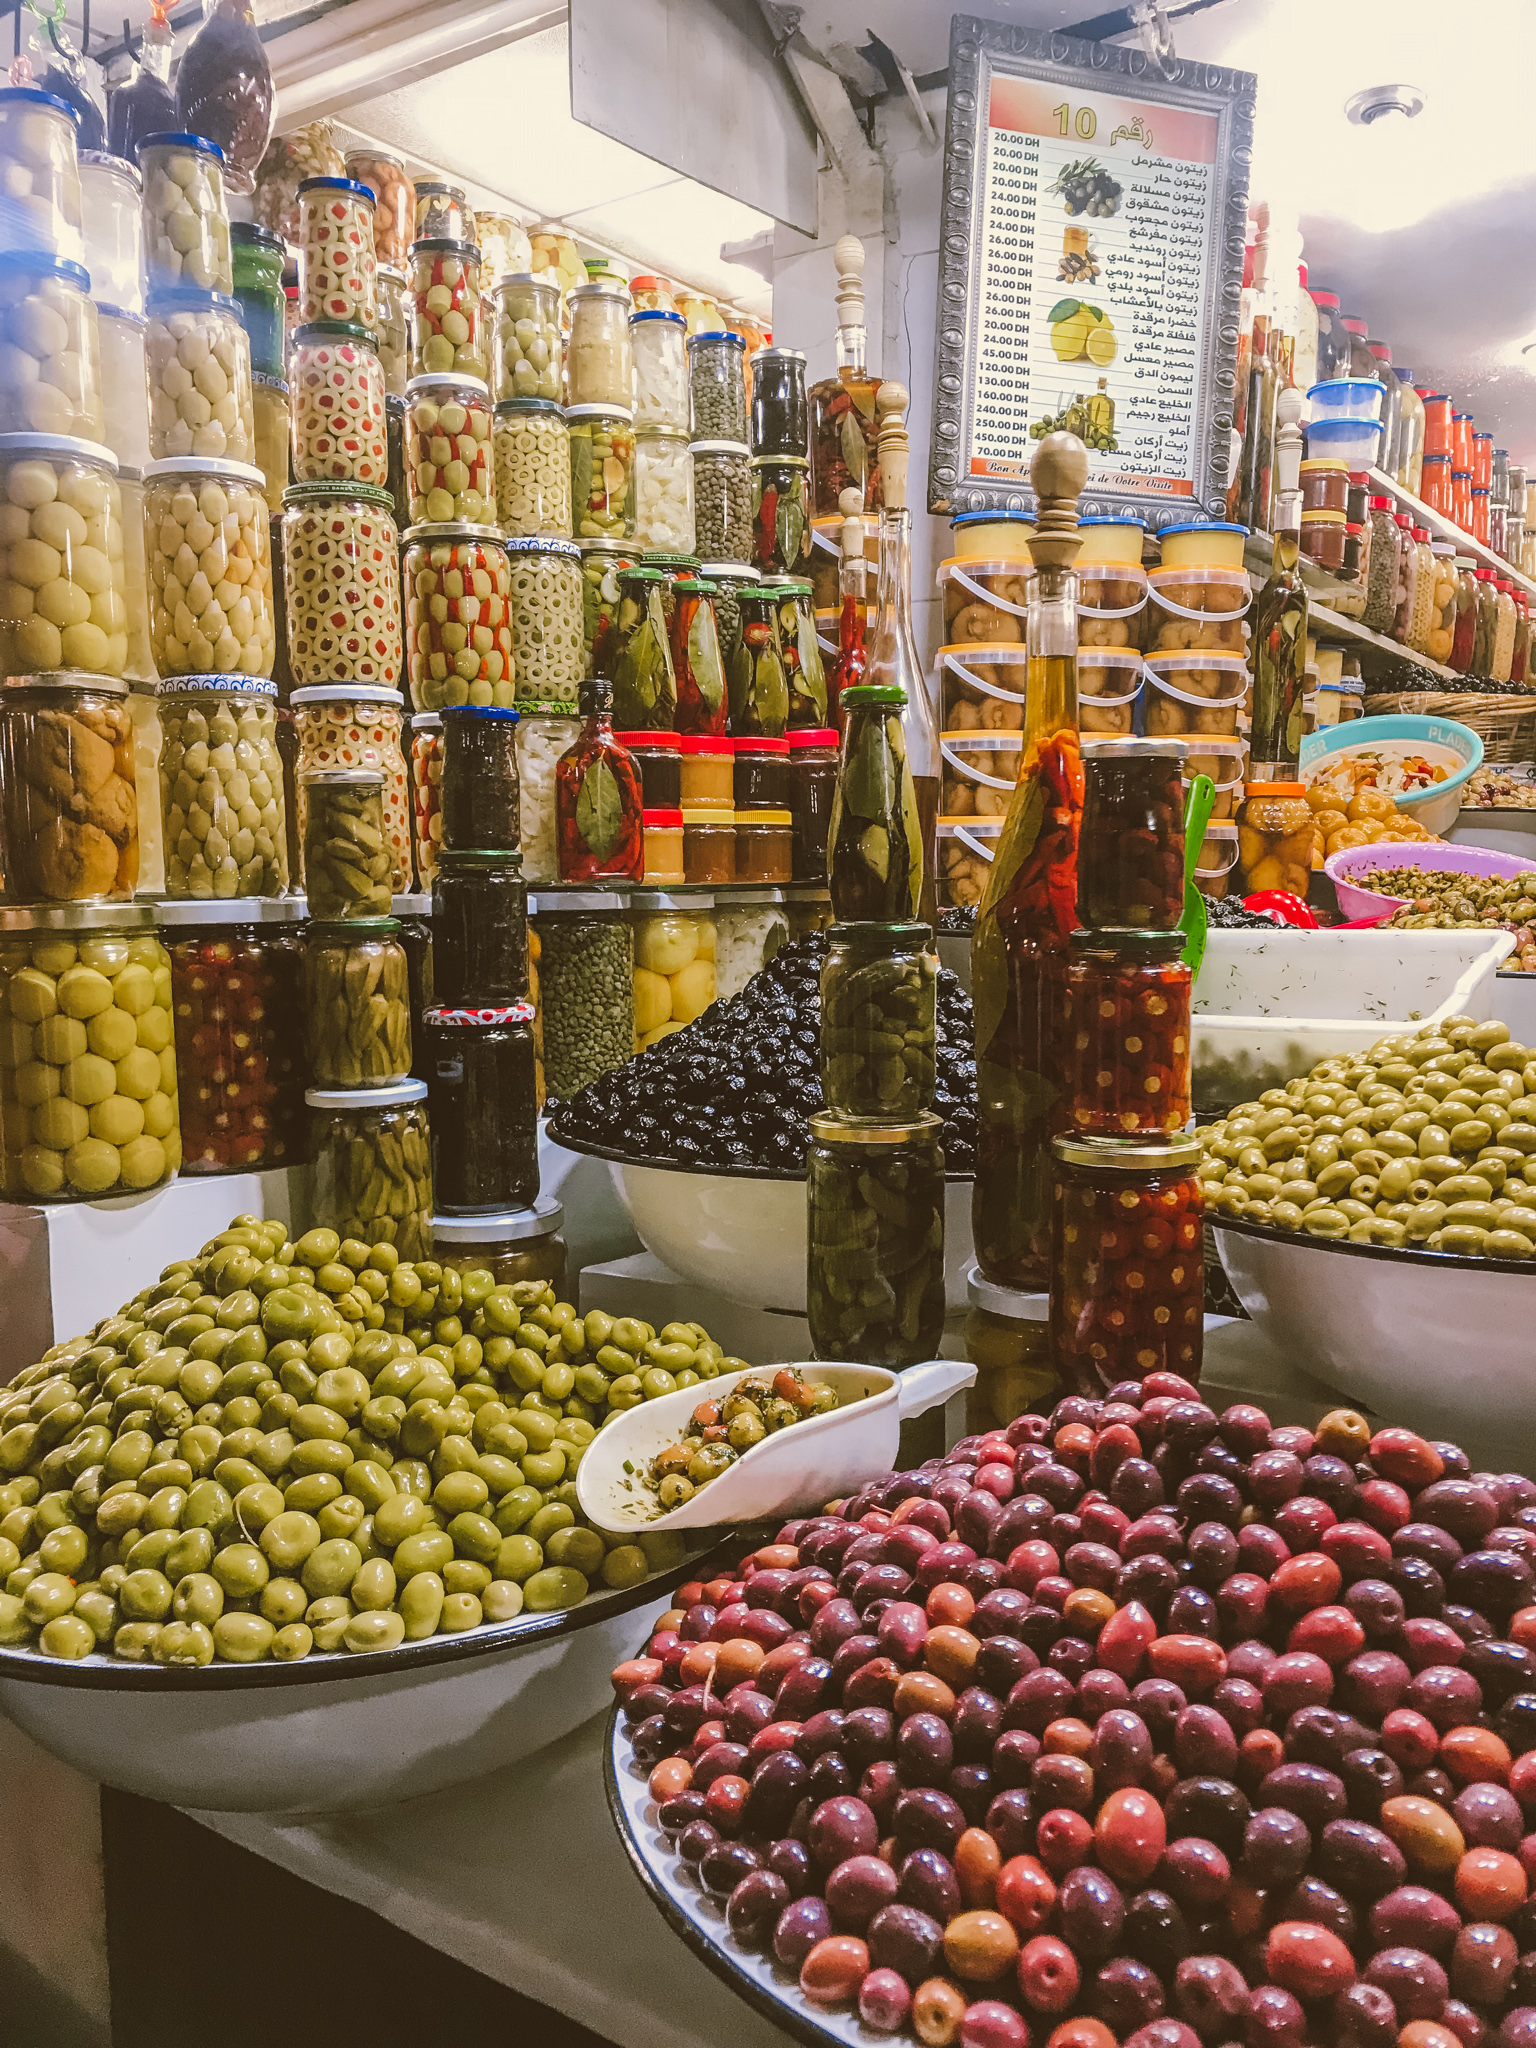 The Foodies Guide to Restaurants in Marrakech Medina- Monique McHugh Blog